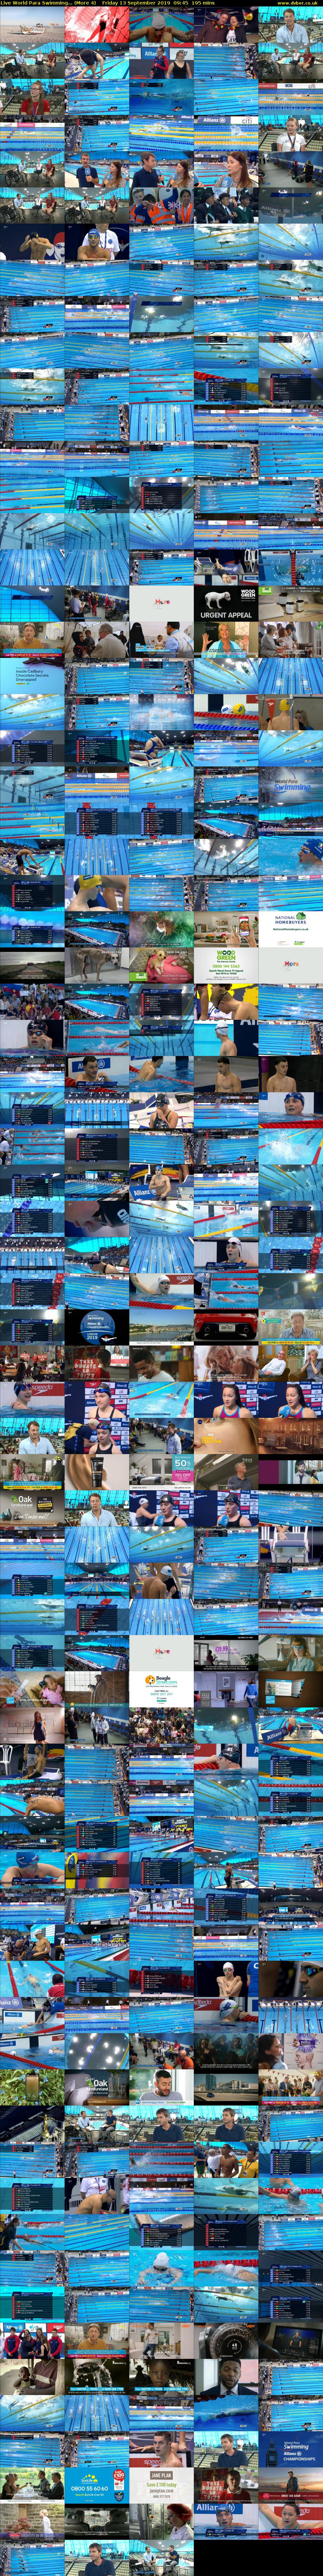 Live World Para Swimming... (More 4) Friday 13 September 2019 09:45 - 13:00